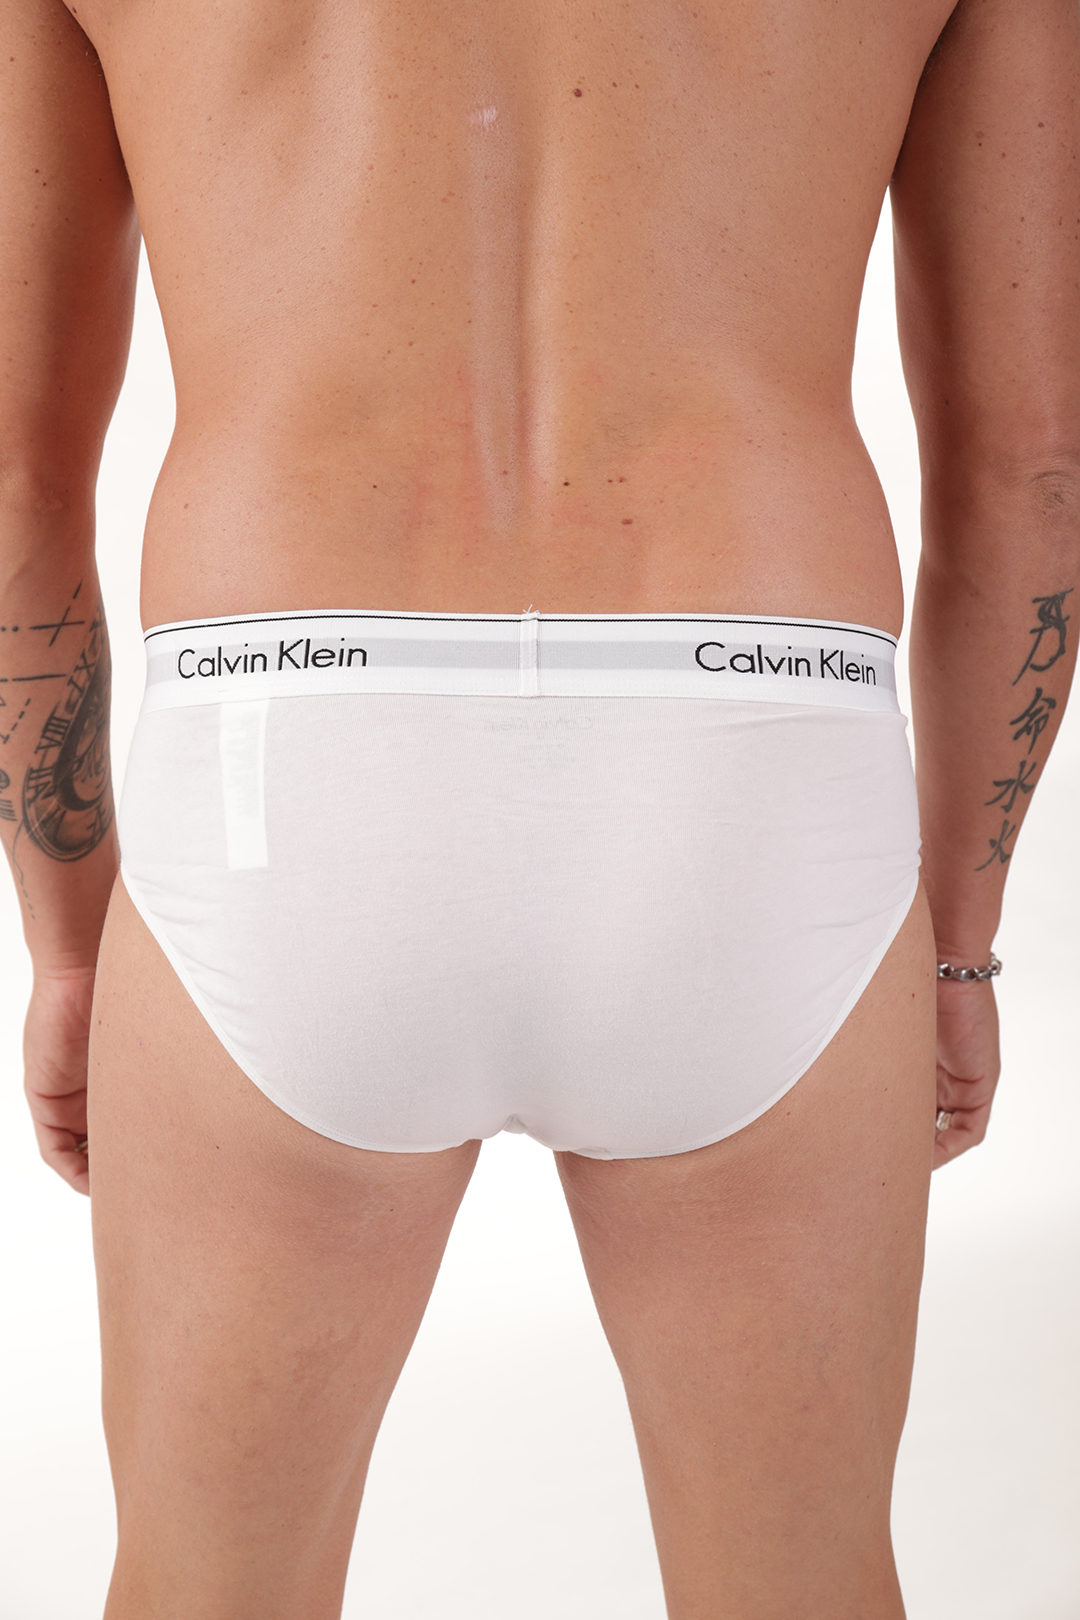 Druipend pijpleiding segment Calvin Klein Logoed Waist Band Stretch Cotton 2 Slip Set men - Glamood  Outlet